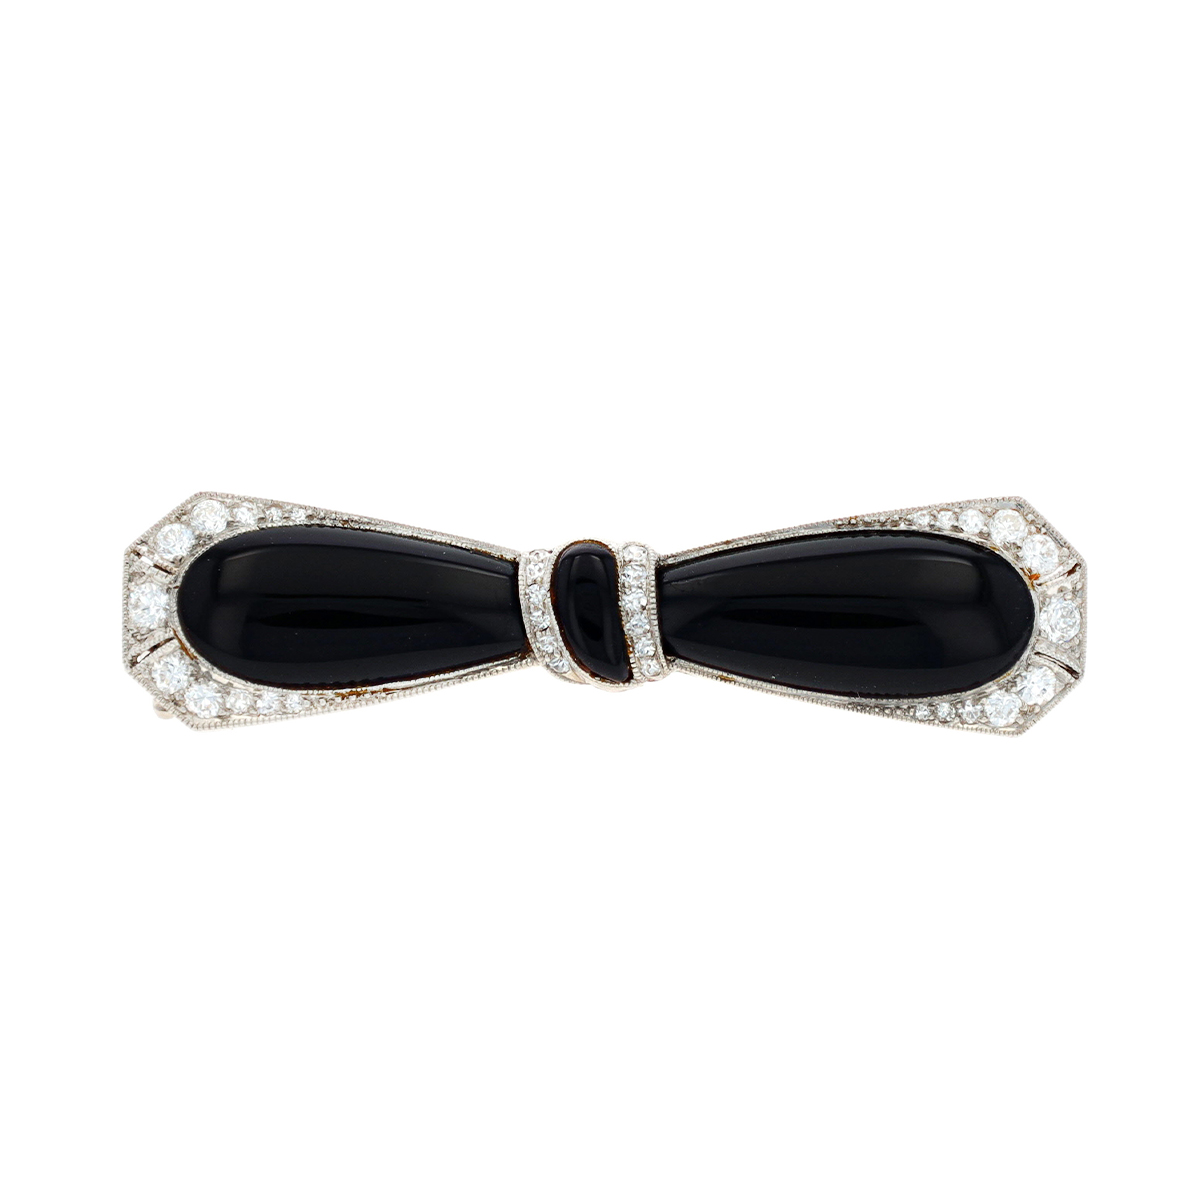 Platinum Art Deco Black Onyx & Diamond Bow Pin